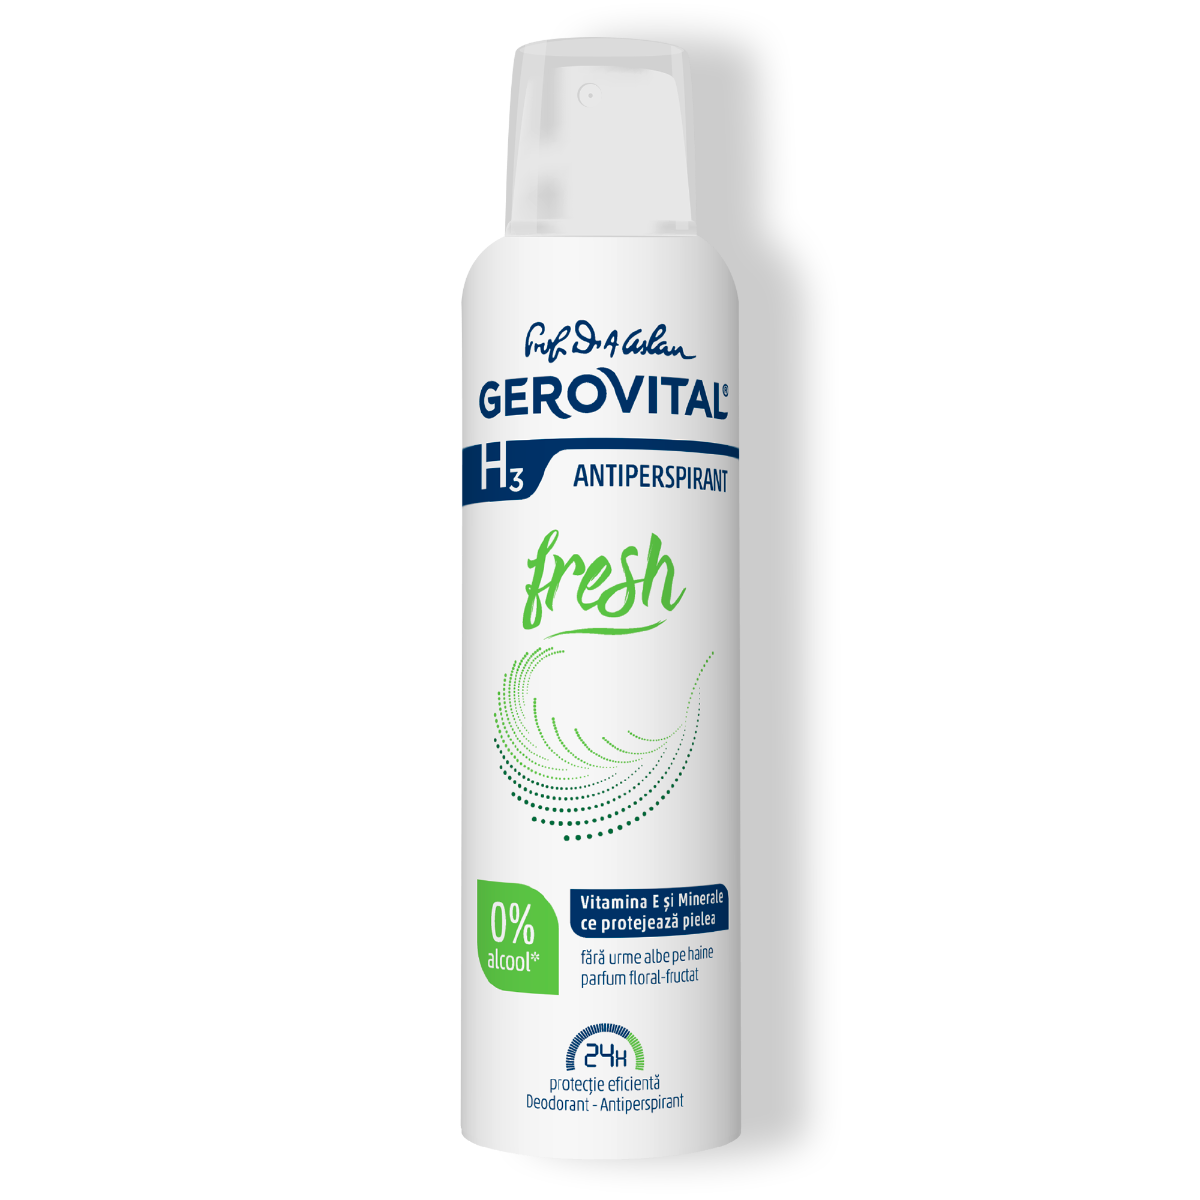 Deodorant Antiperspirant Fresh 150 Ml Gerovital H3